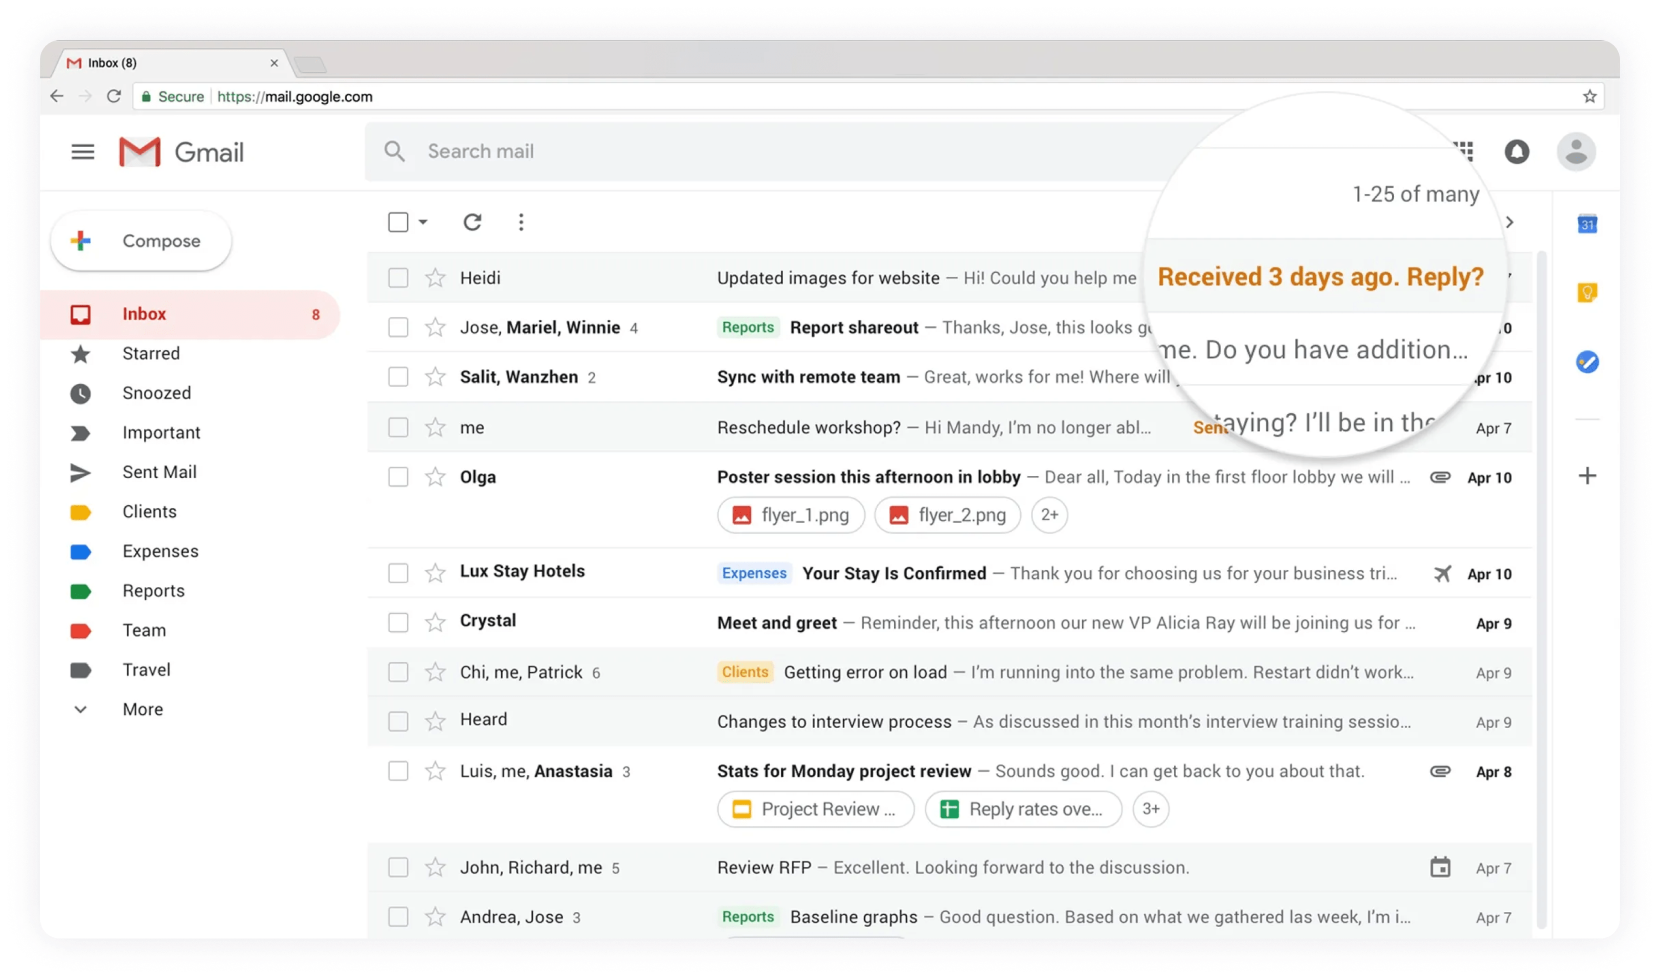 Mailman is a lightweight Gmail plugin